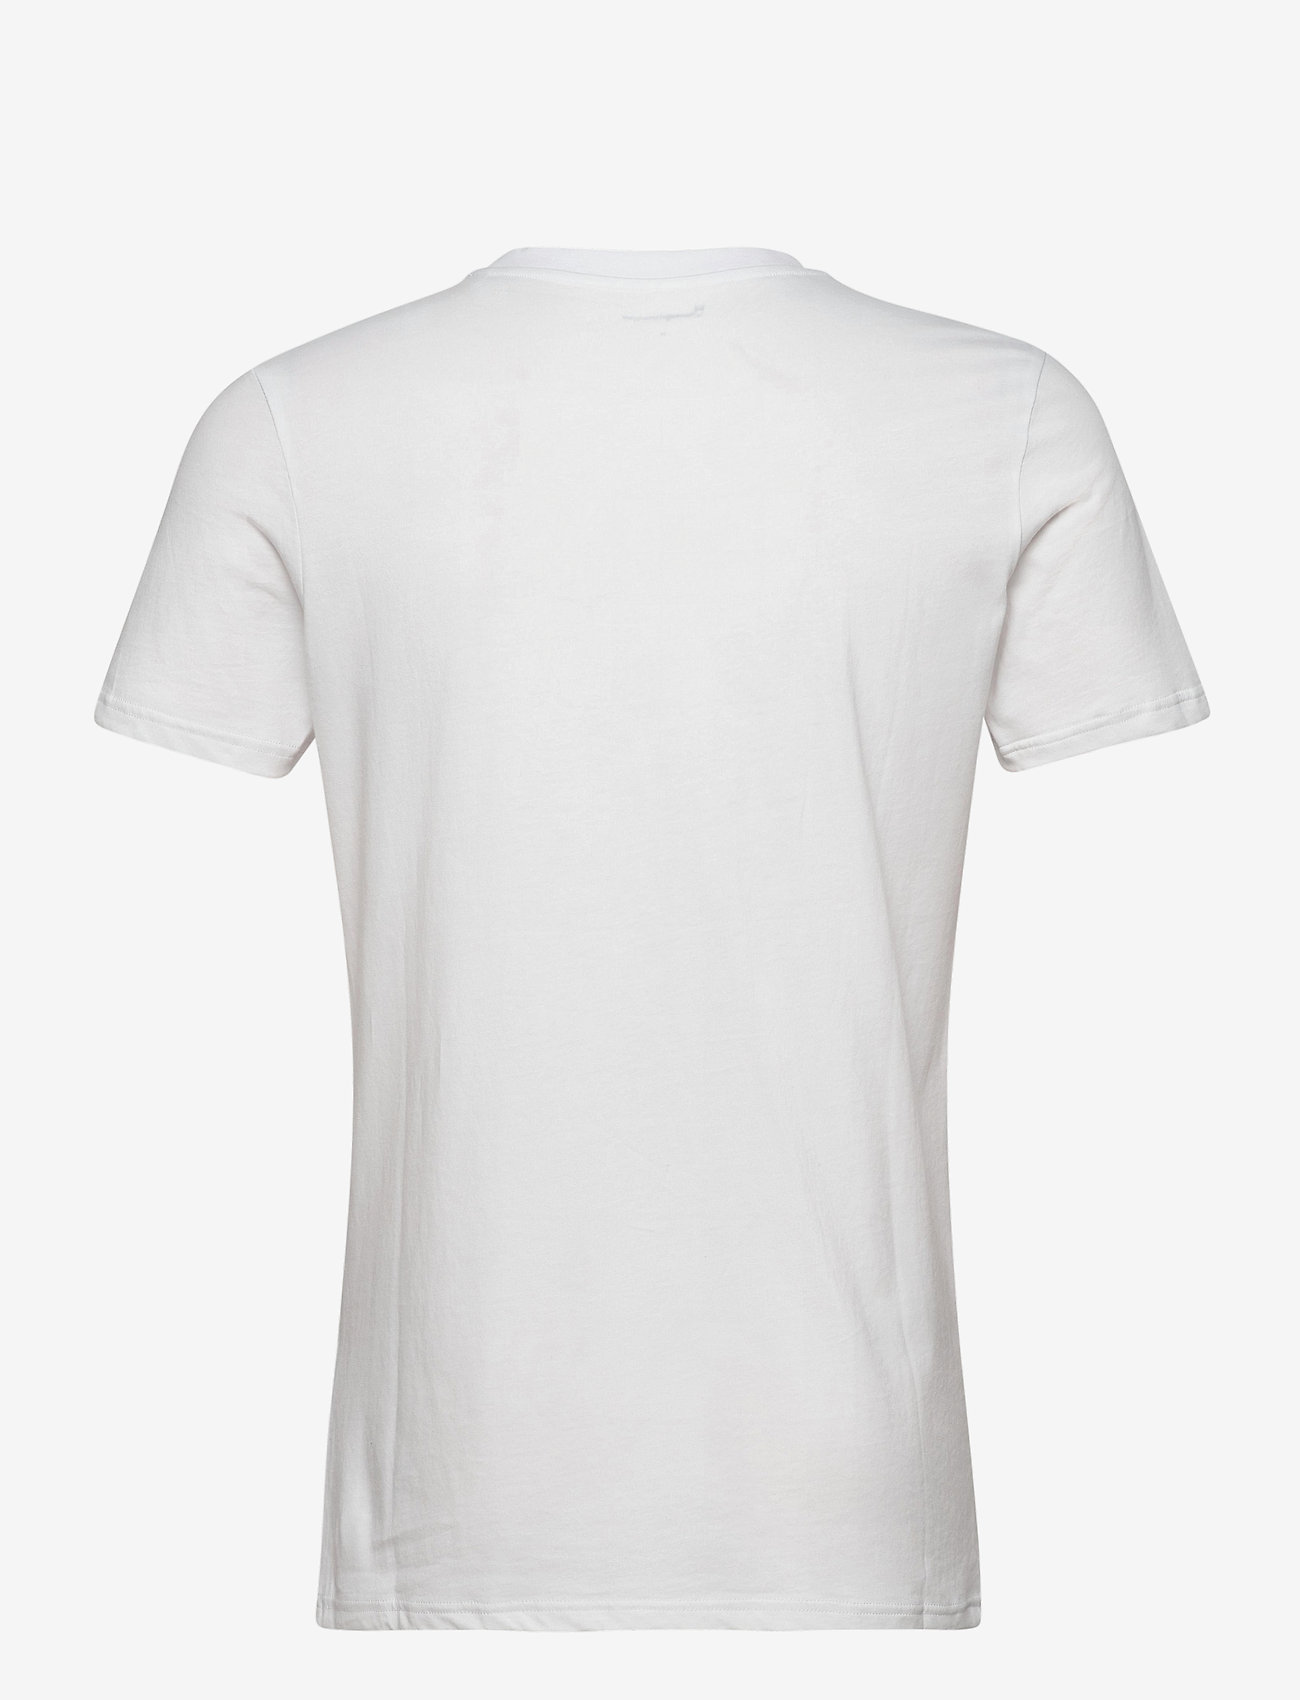 Knowledge Cotton Apparel - Regular trademark chest print t-shi - t-shirts - bright white - 1